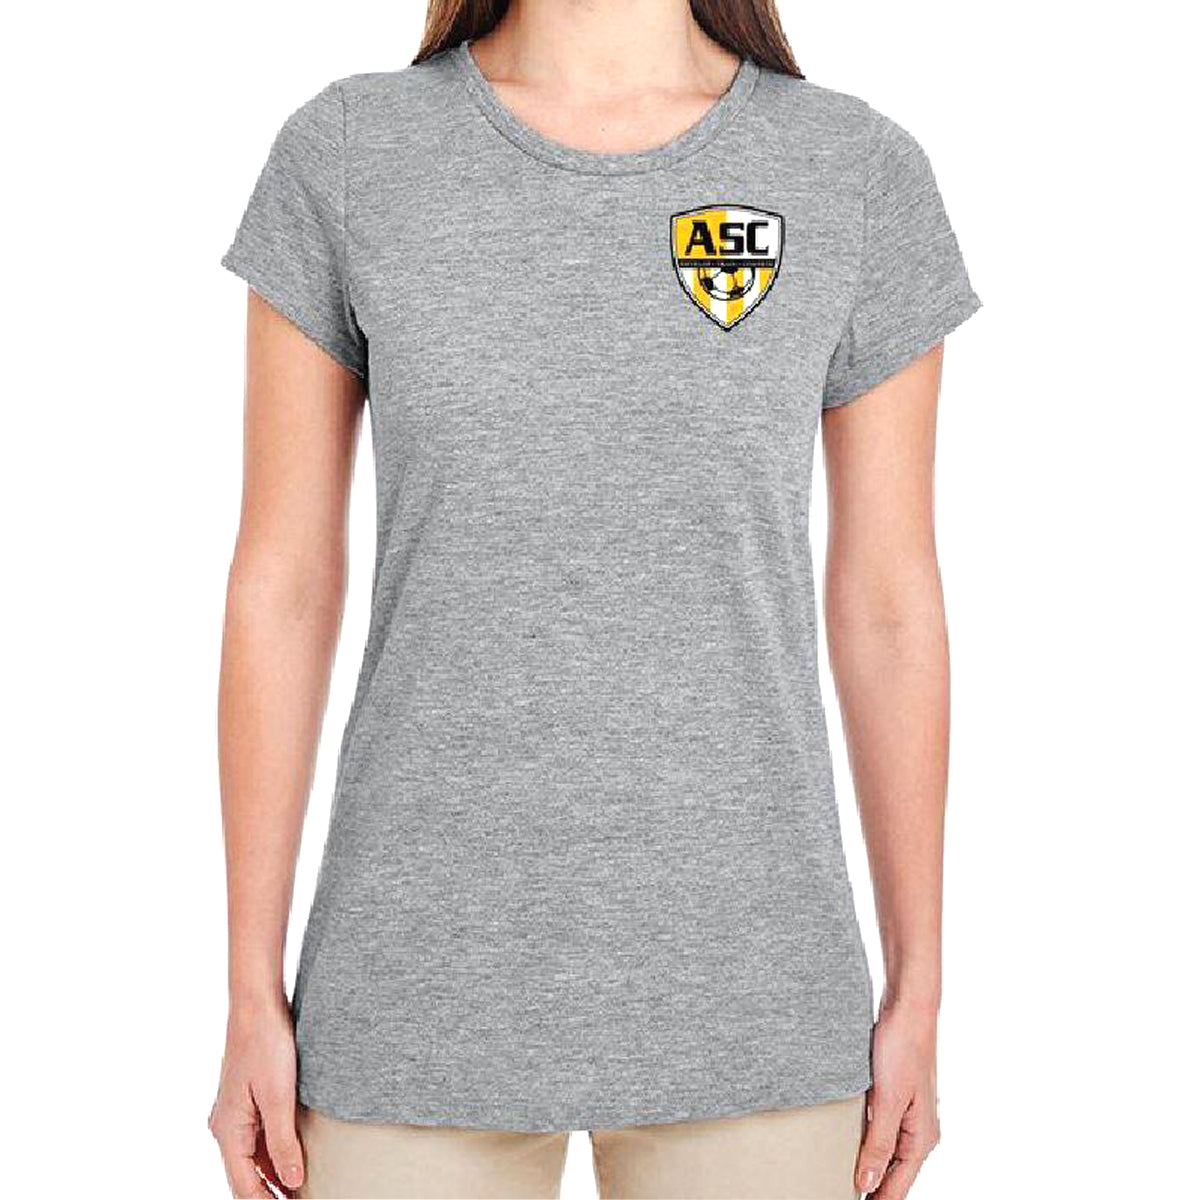 Shop Women's Sports Shirts for Training - Goal Kick Soccer